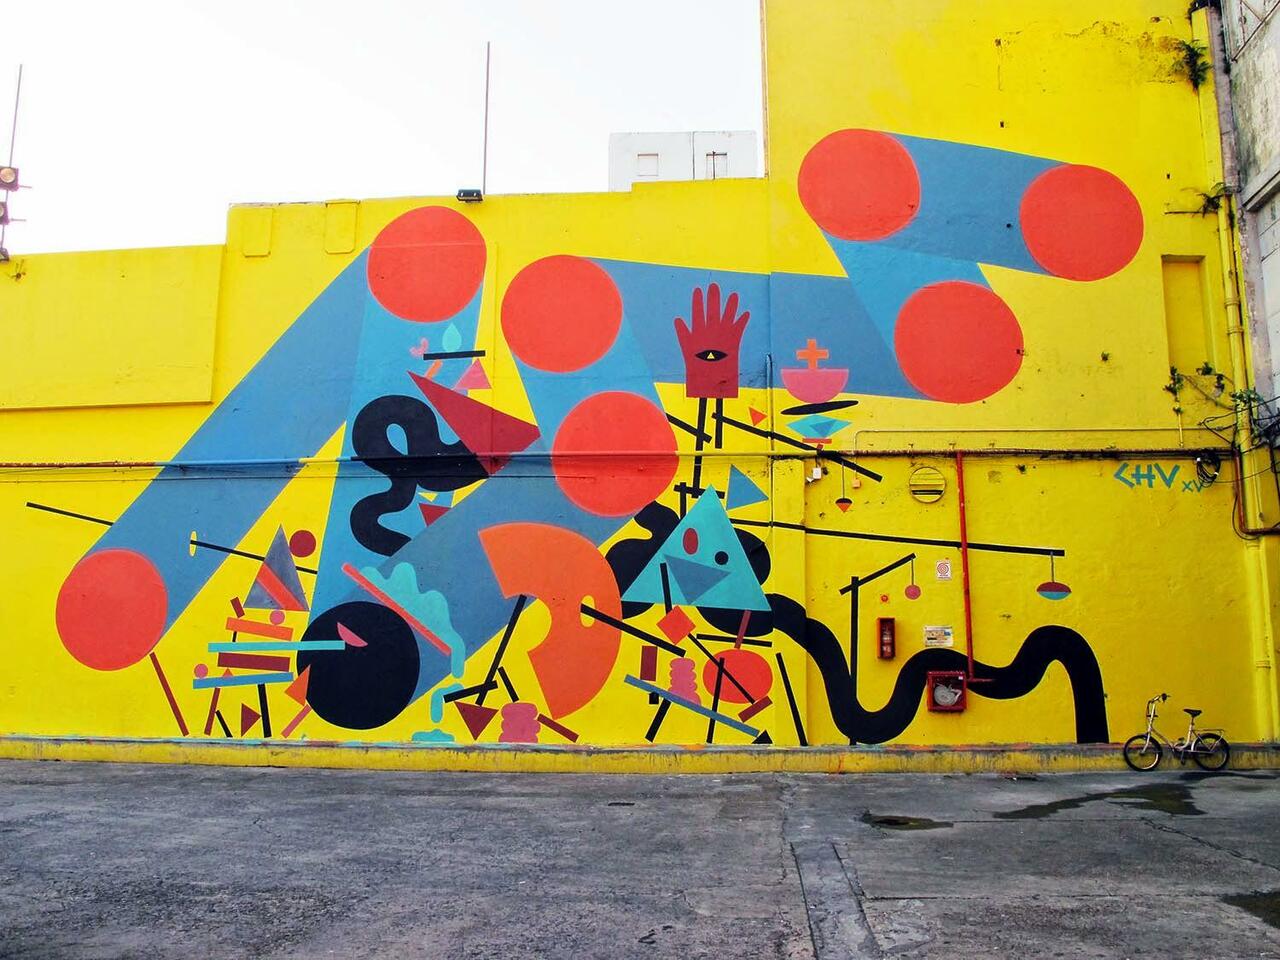 RT @StreetArt_Graf: Streetart by Chu - Ciudad Cultural Konex in Buenos Aires. #streetart #urbanart #mural #graffiti http://t.co/n2cnO6oJe2